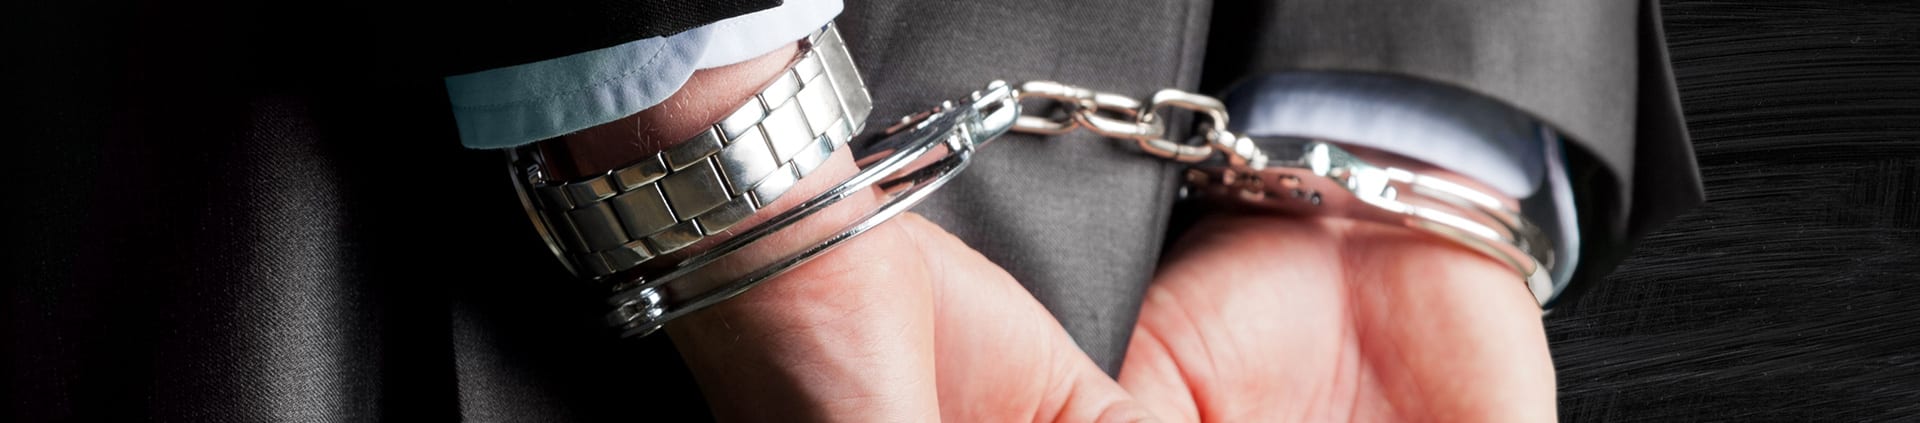 handcuffed due to white collar crime